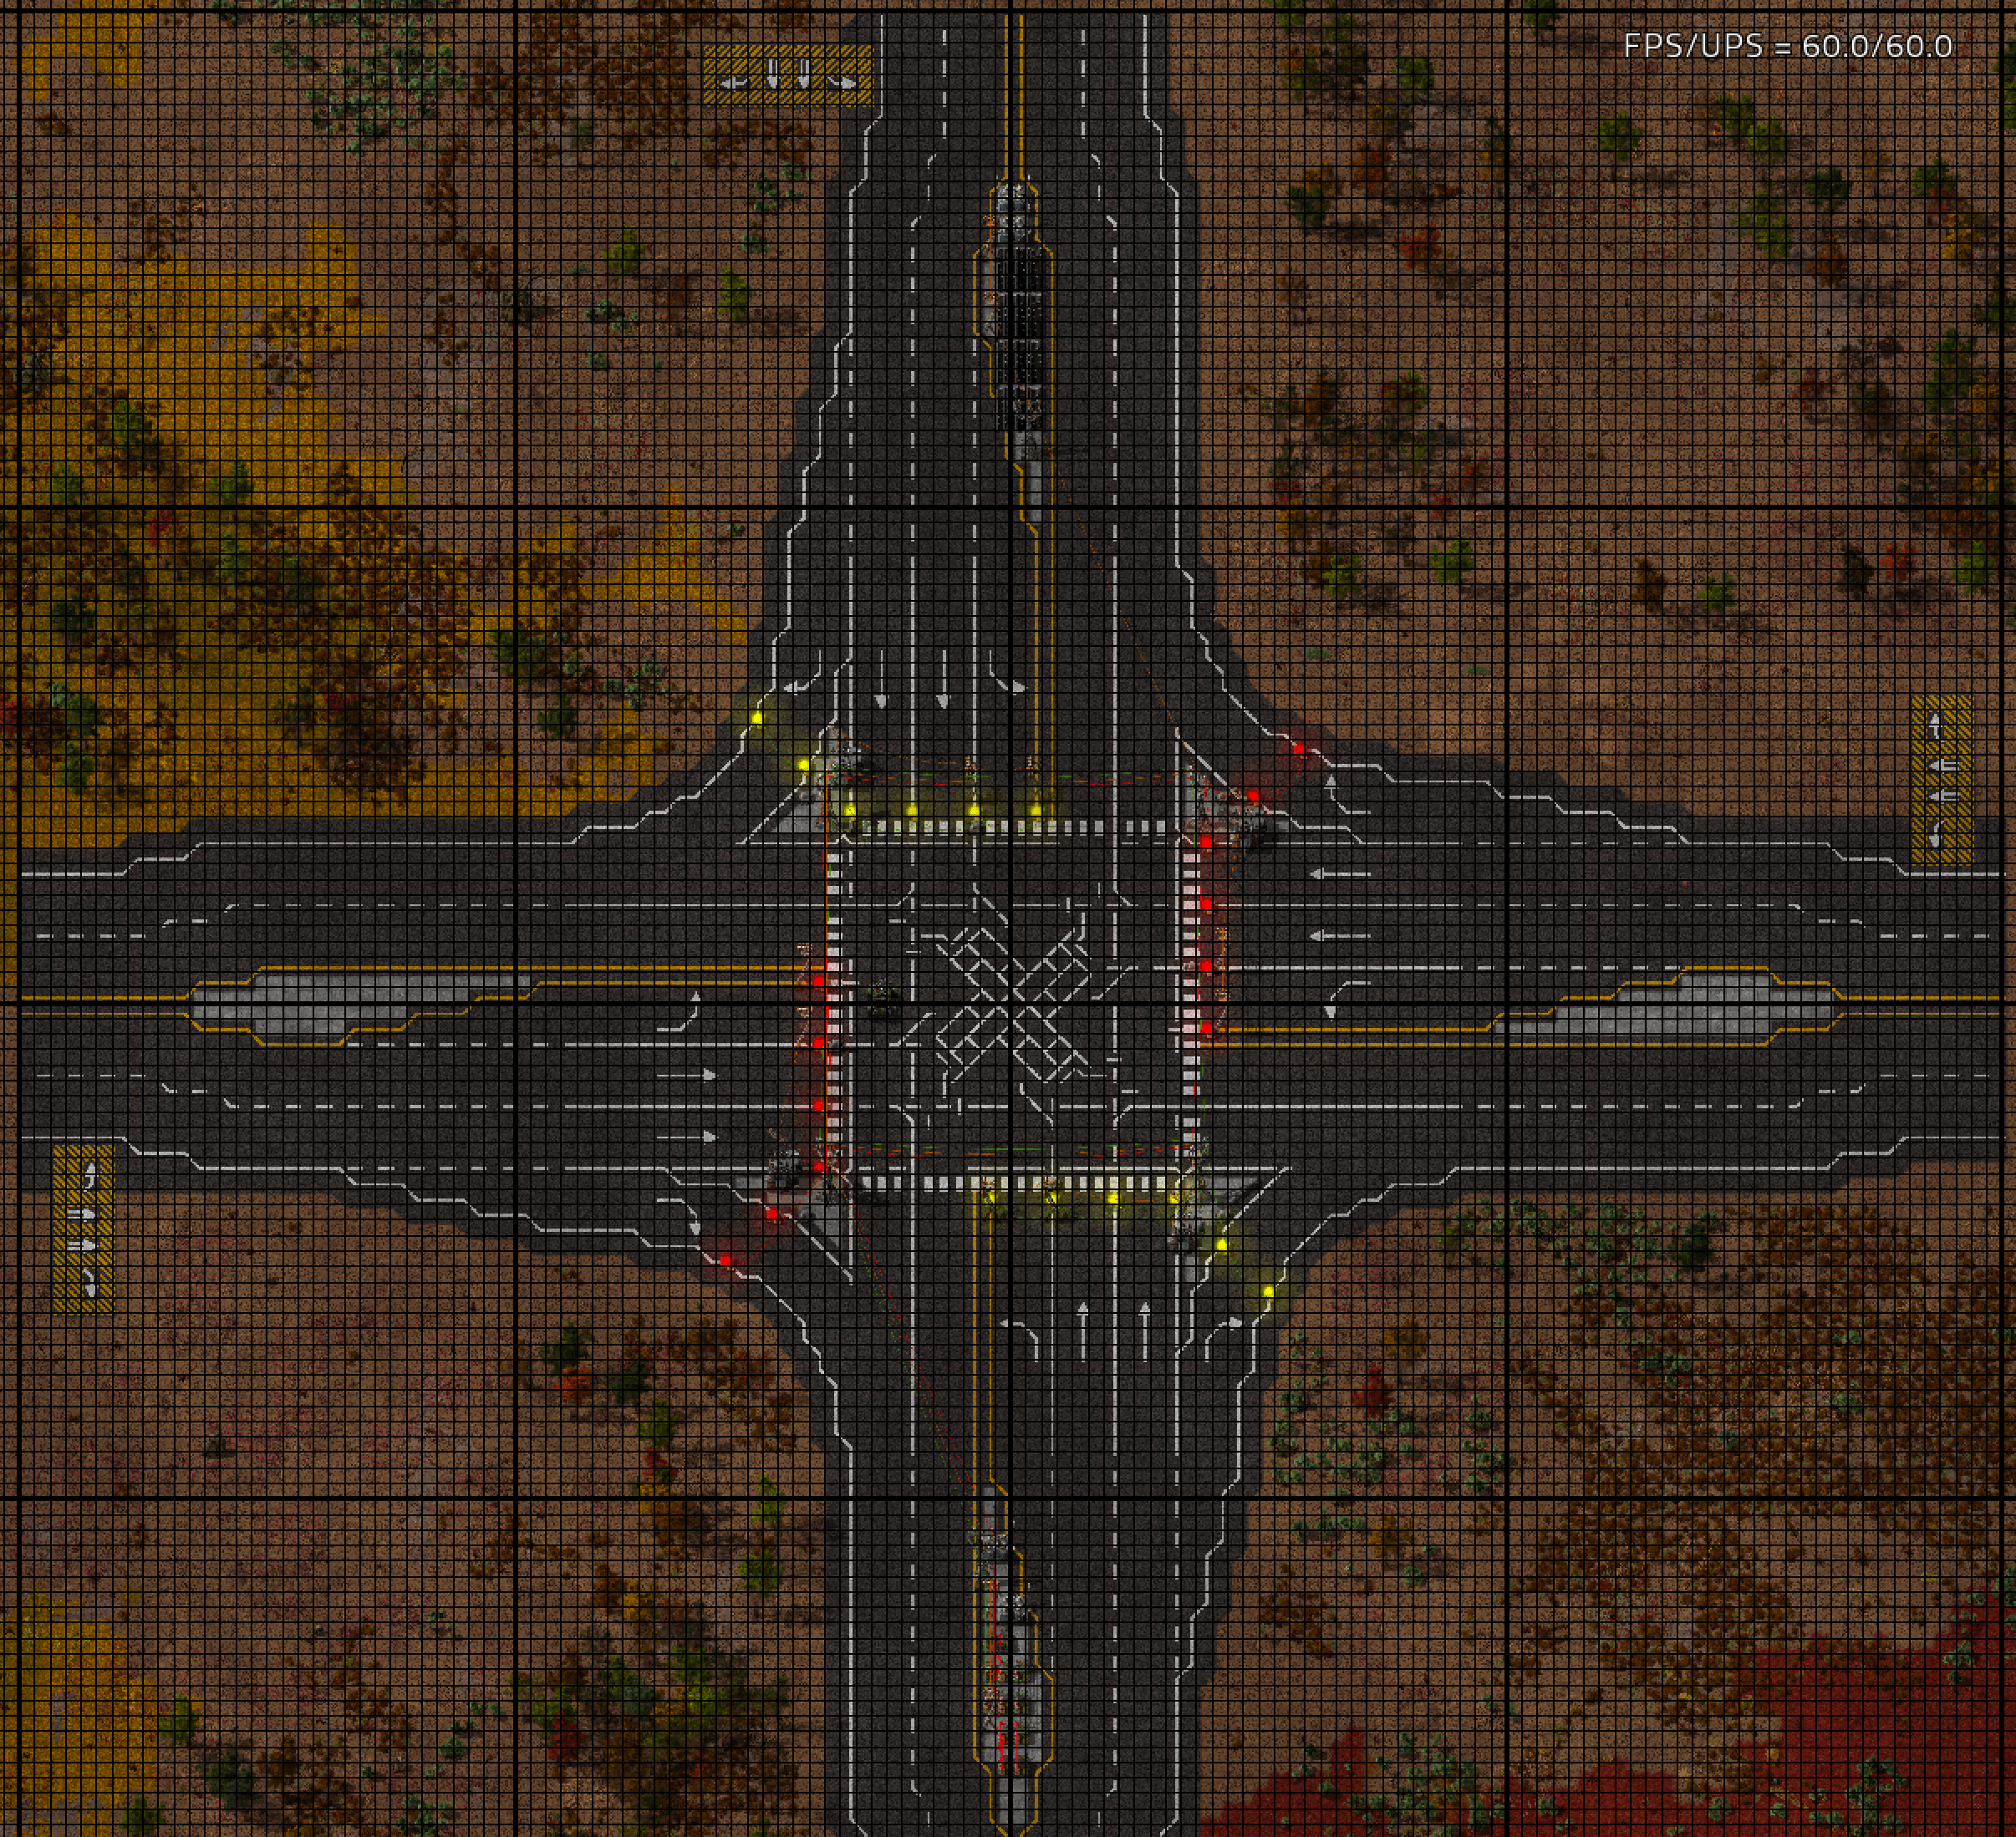 v1.1 4x4 intersection (both lanes through)